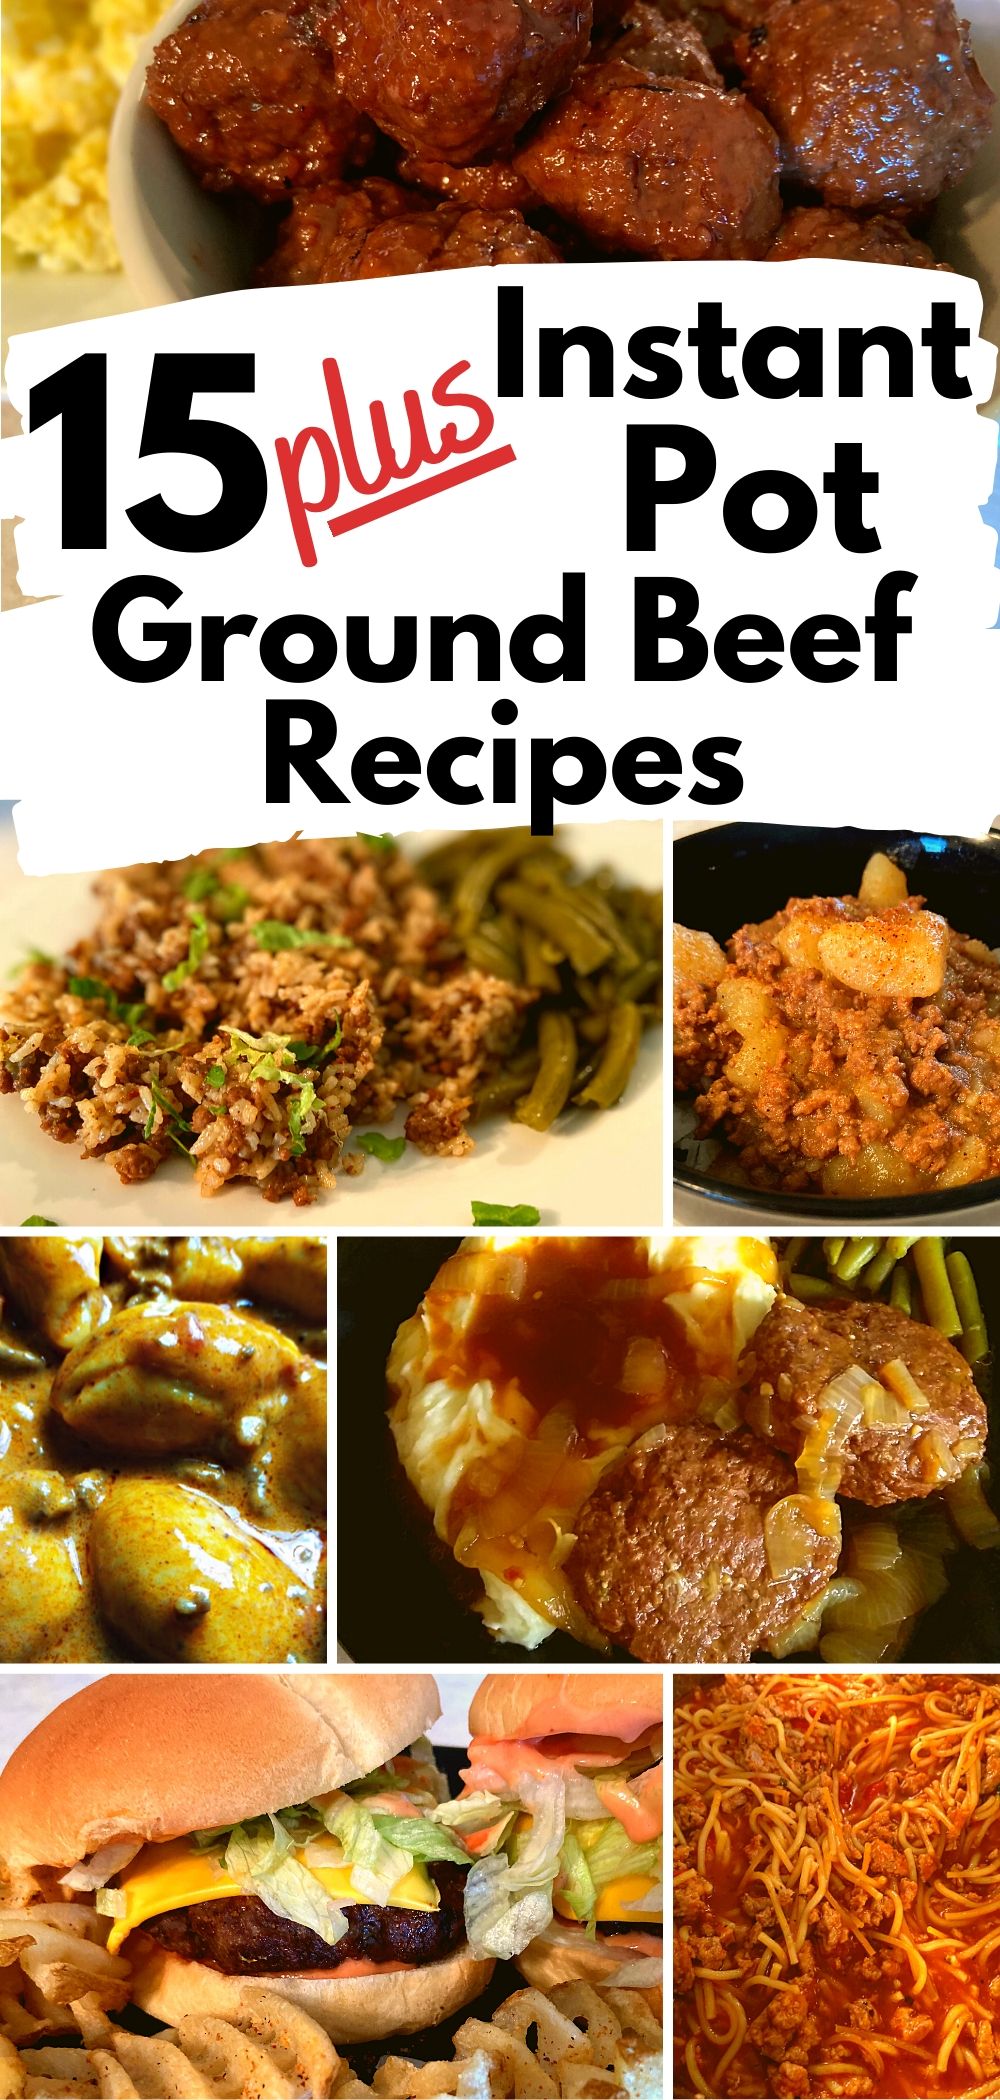 15 Plus Instant Pot Ground Beef Recipes